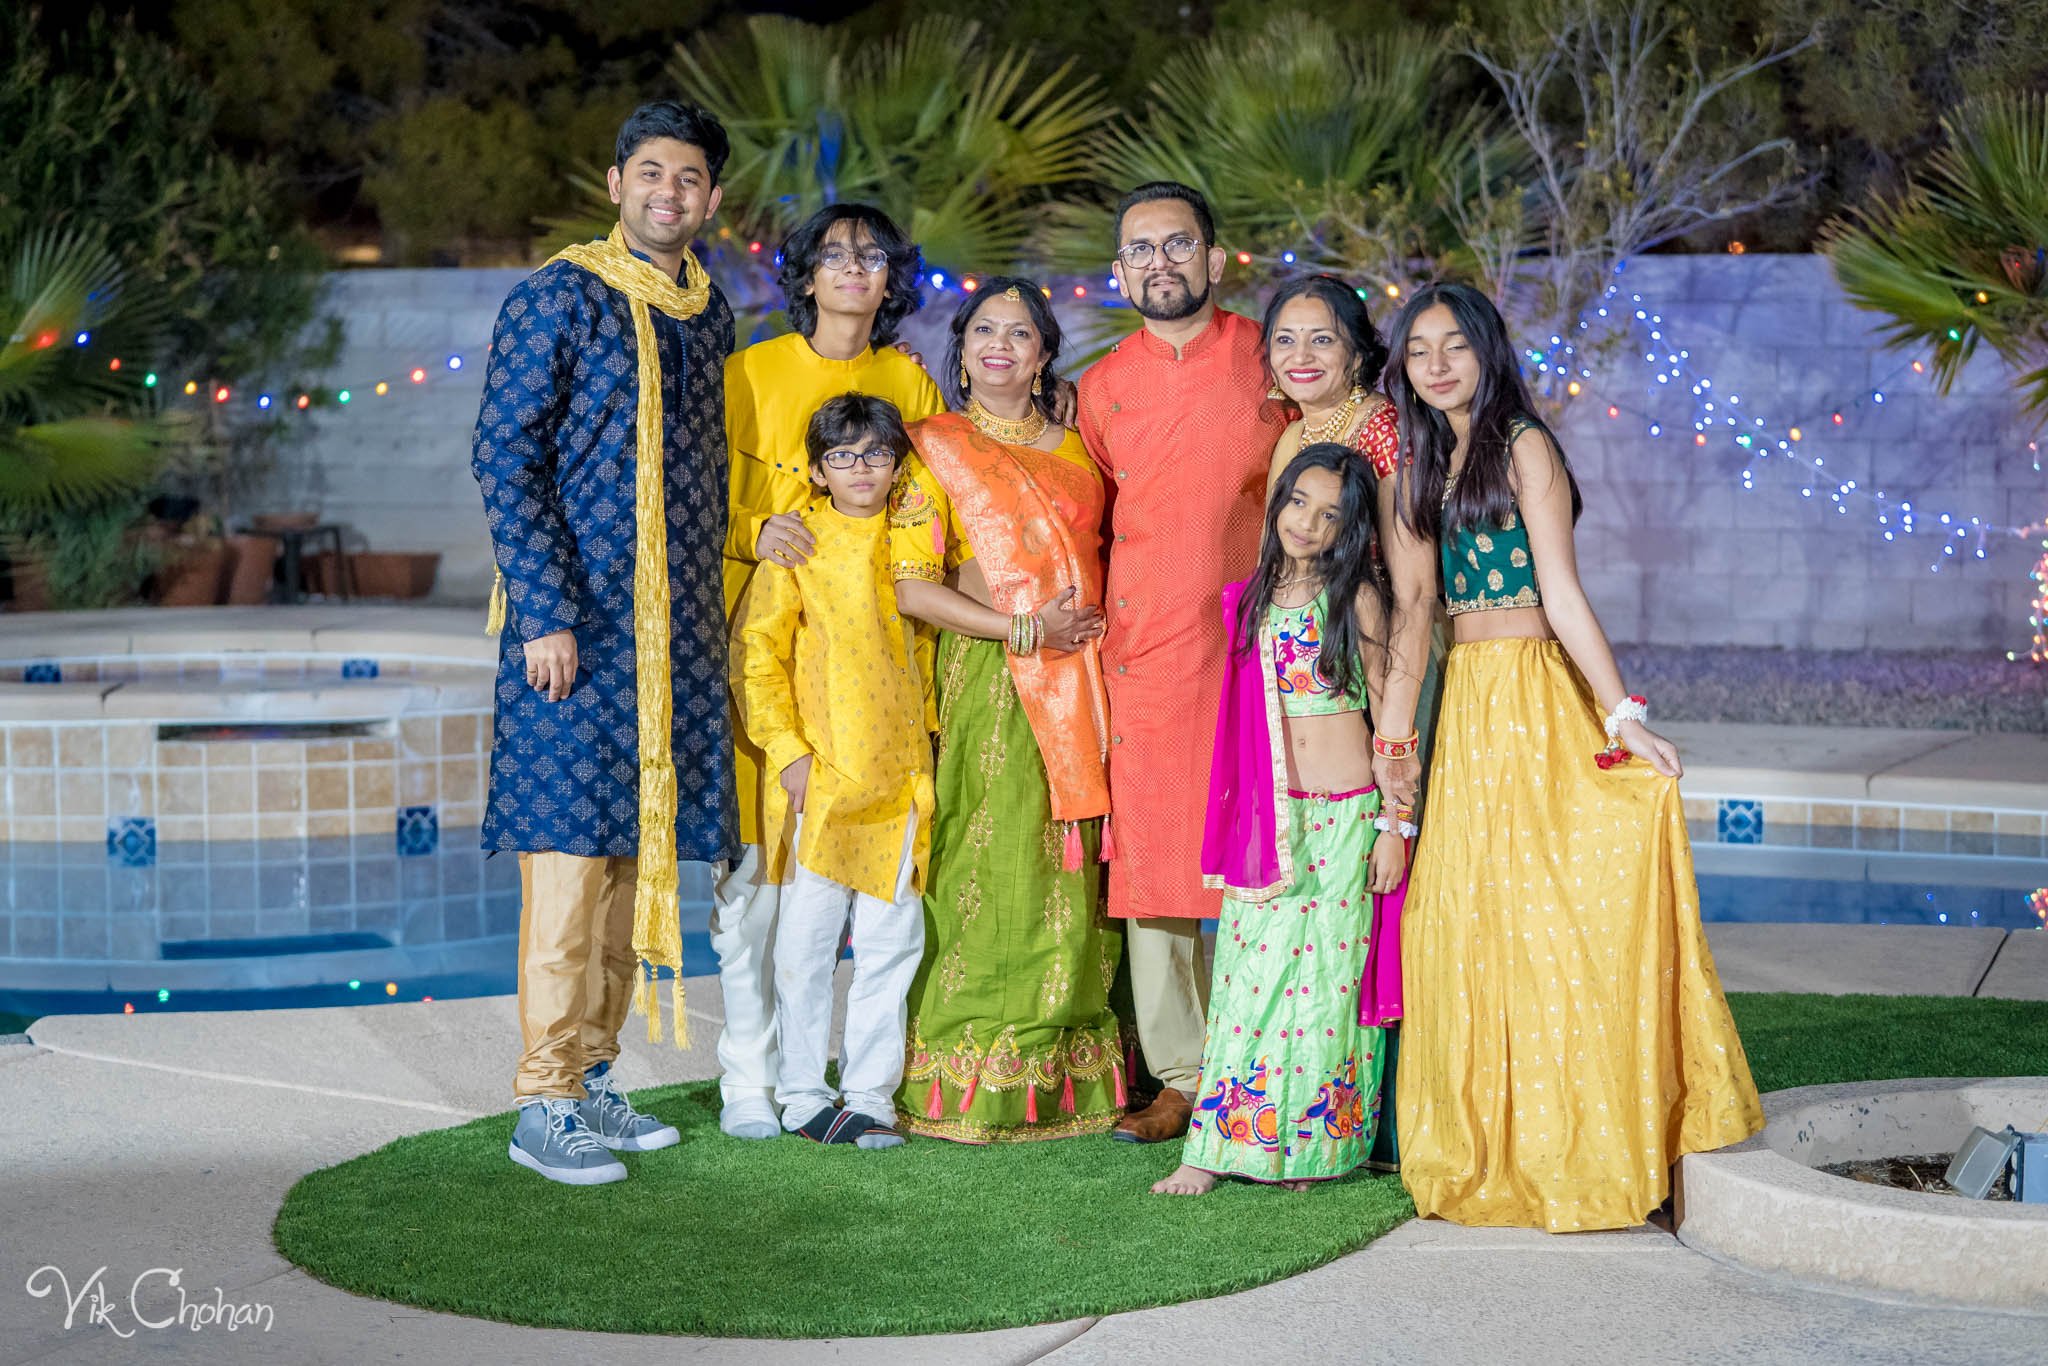 2022-02-04-Hely-&-Parth-Garba-Night-Indian-Wedding-Vik-Chohan-Photography-Photo-Booth-Social-Media-VCP-201.jpg